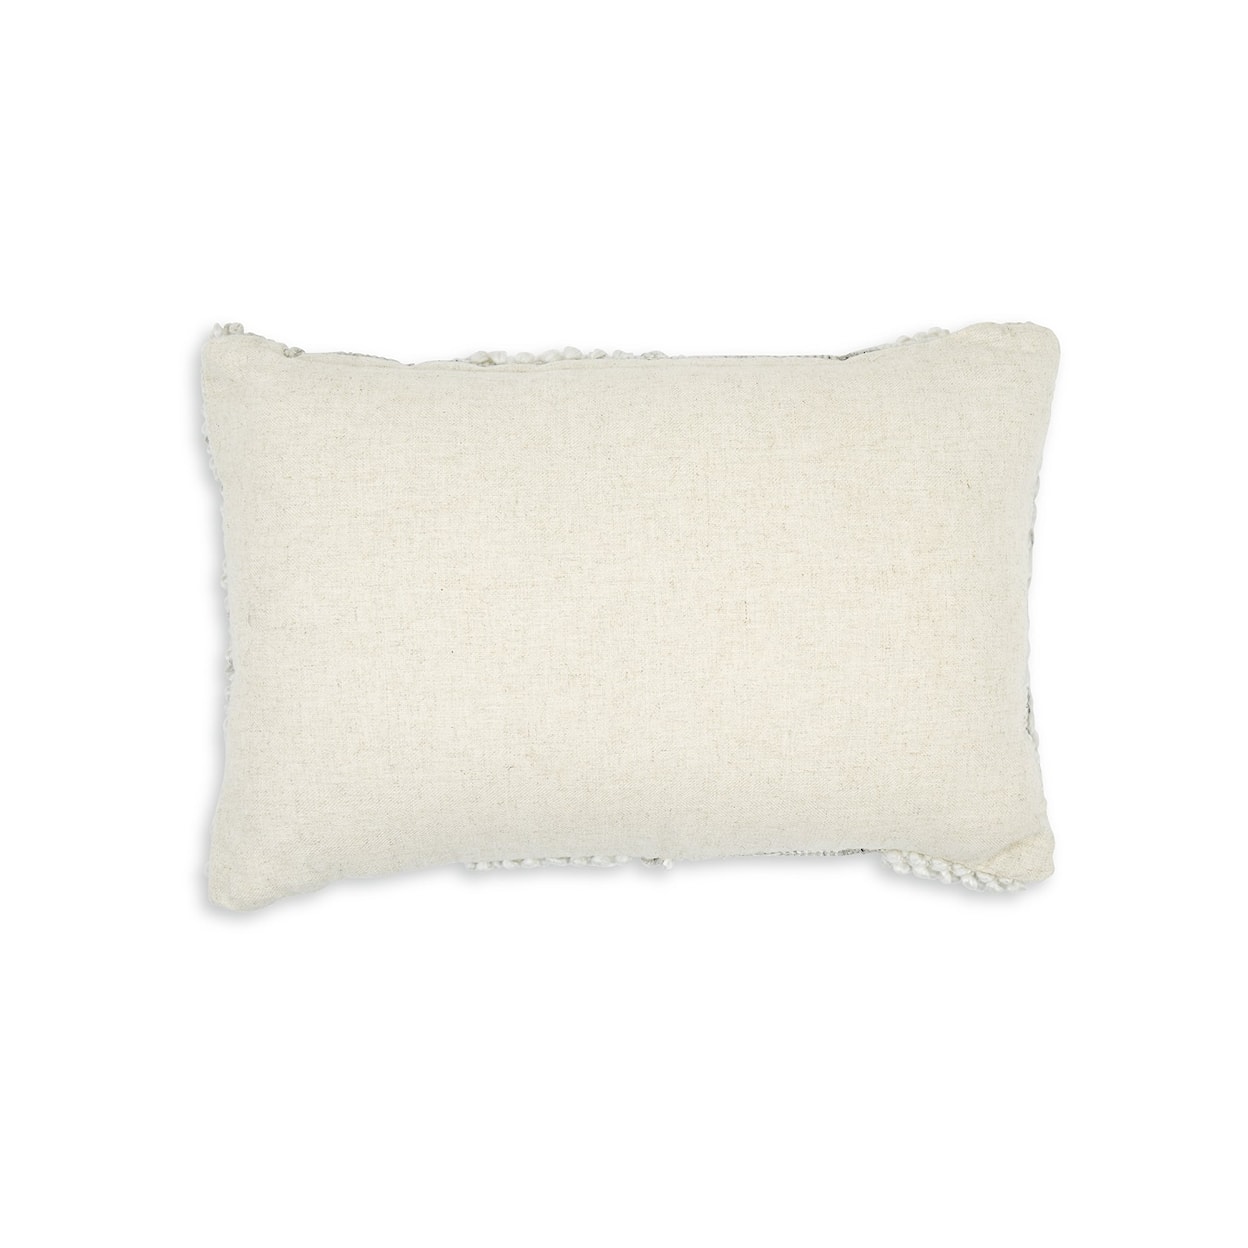 Benchcraft Standon Pillow (Set of 4)